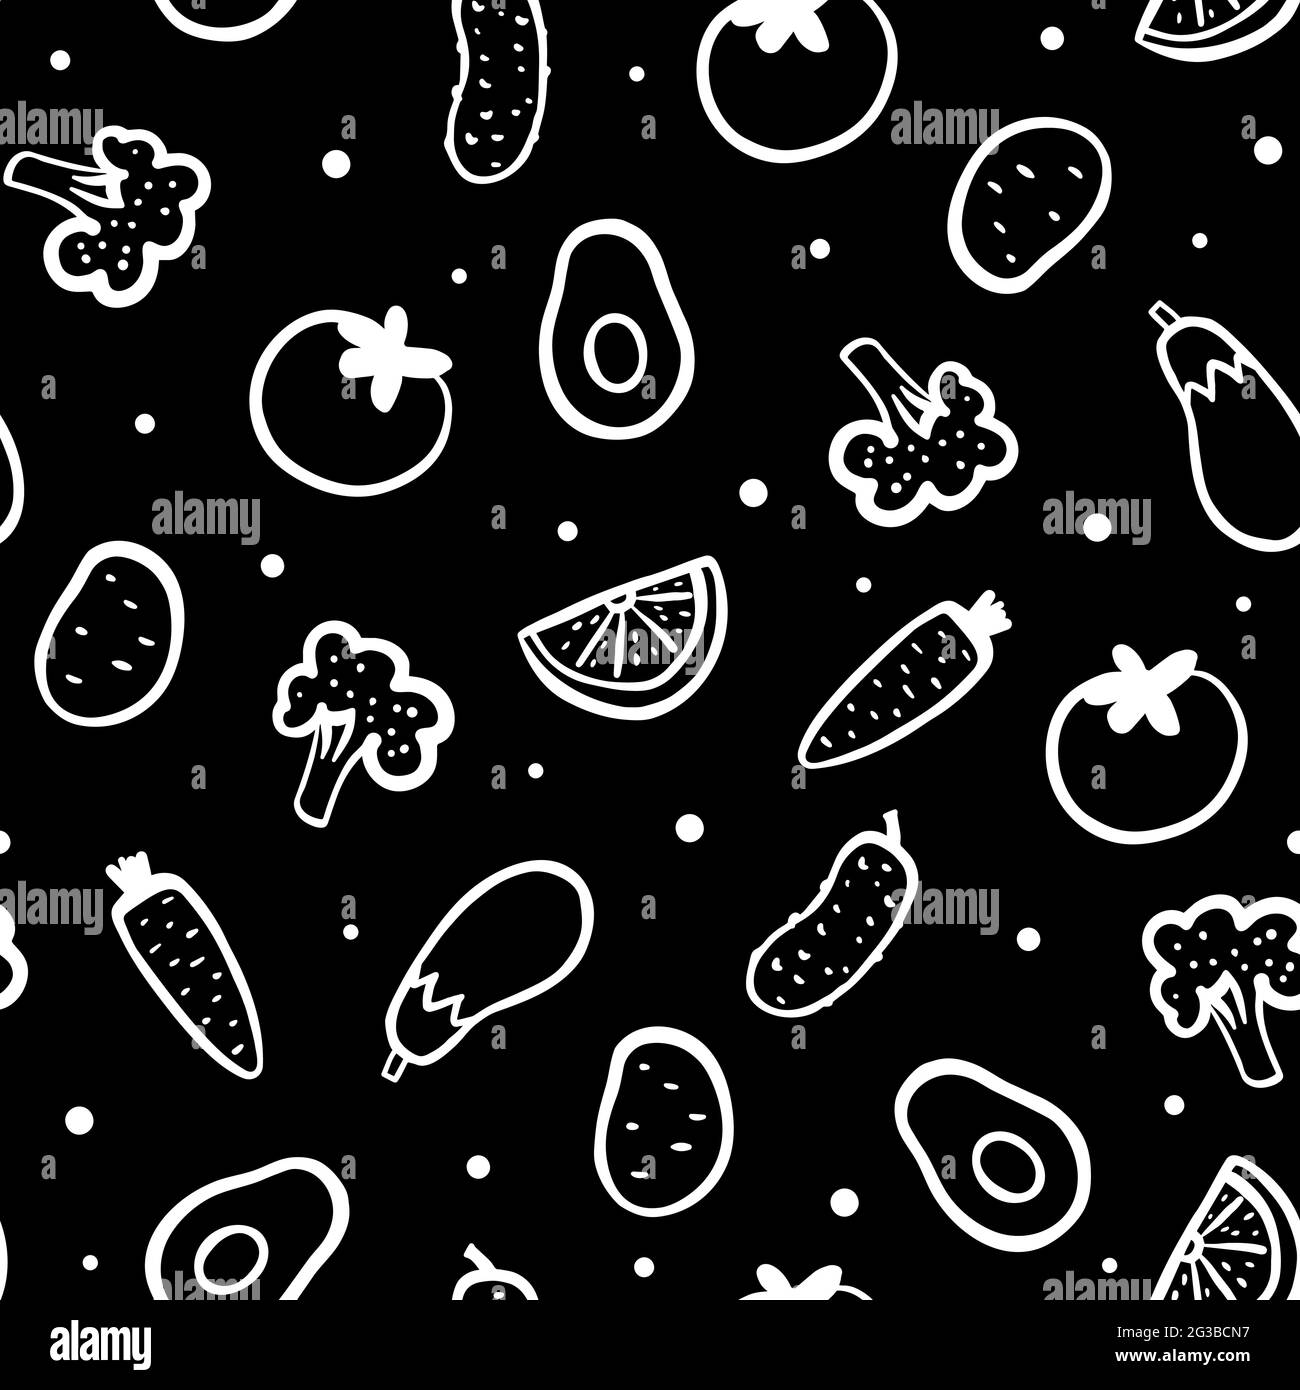 Vegetables set Seamless pattern. Broccoli, avocado, carrot, potato, tomato, cucumber, eggplant, lemon on black background. Hand drawn Chalk board vege Stock Vector